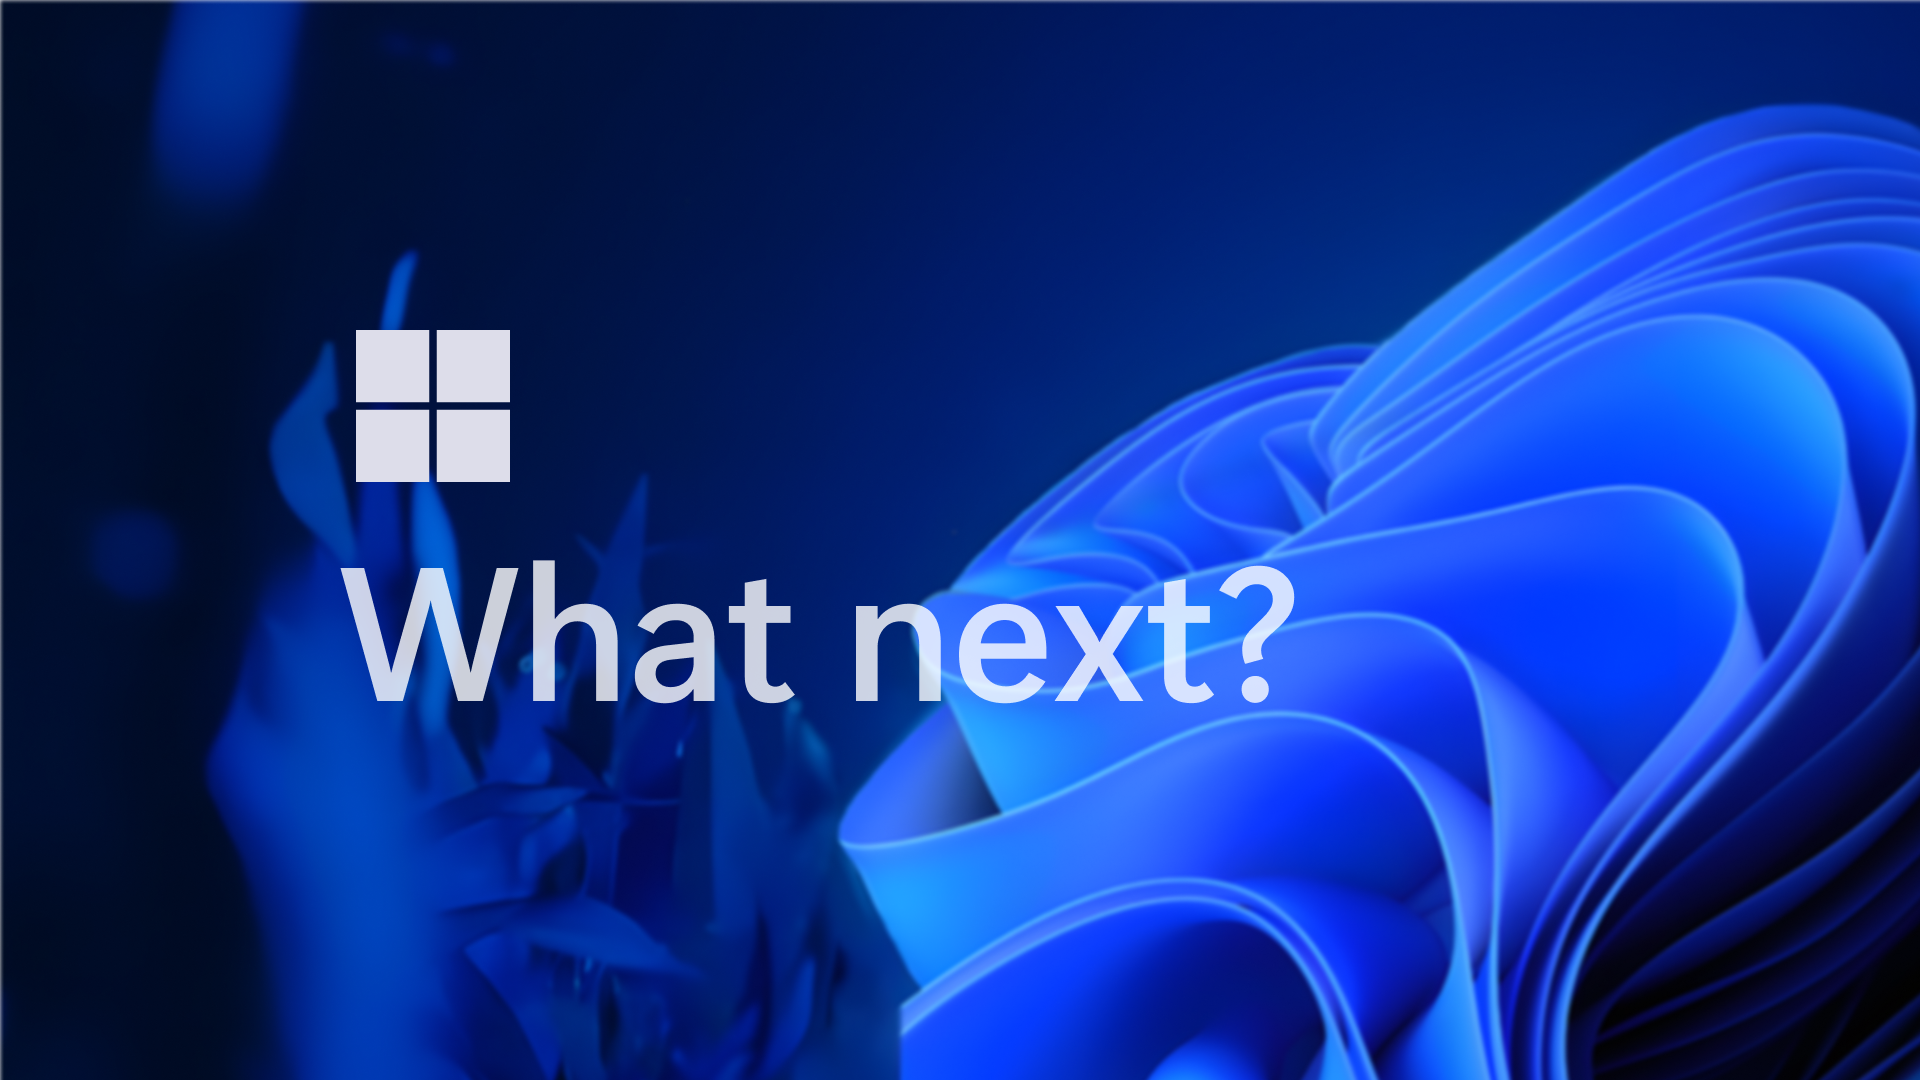 Windows 11 Bloom as seen in commercial